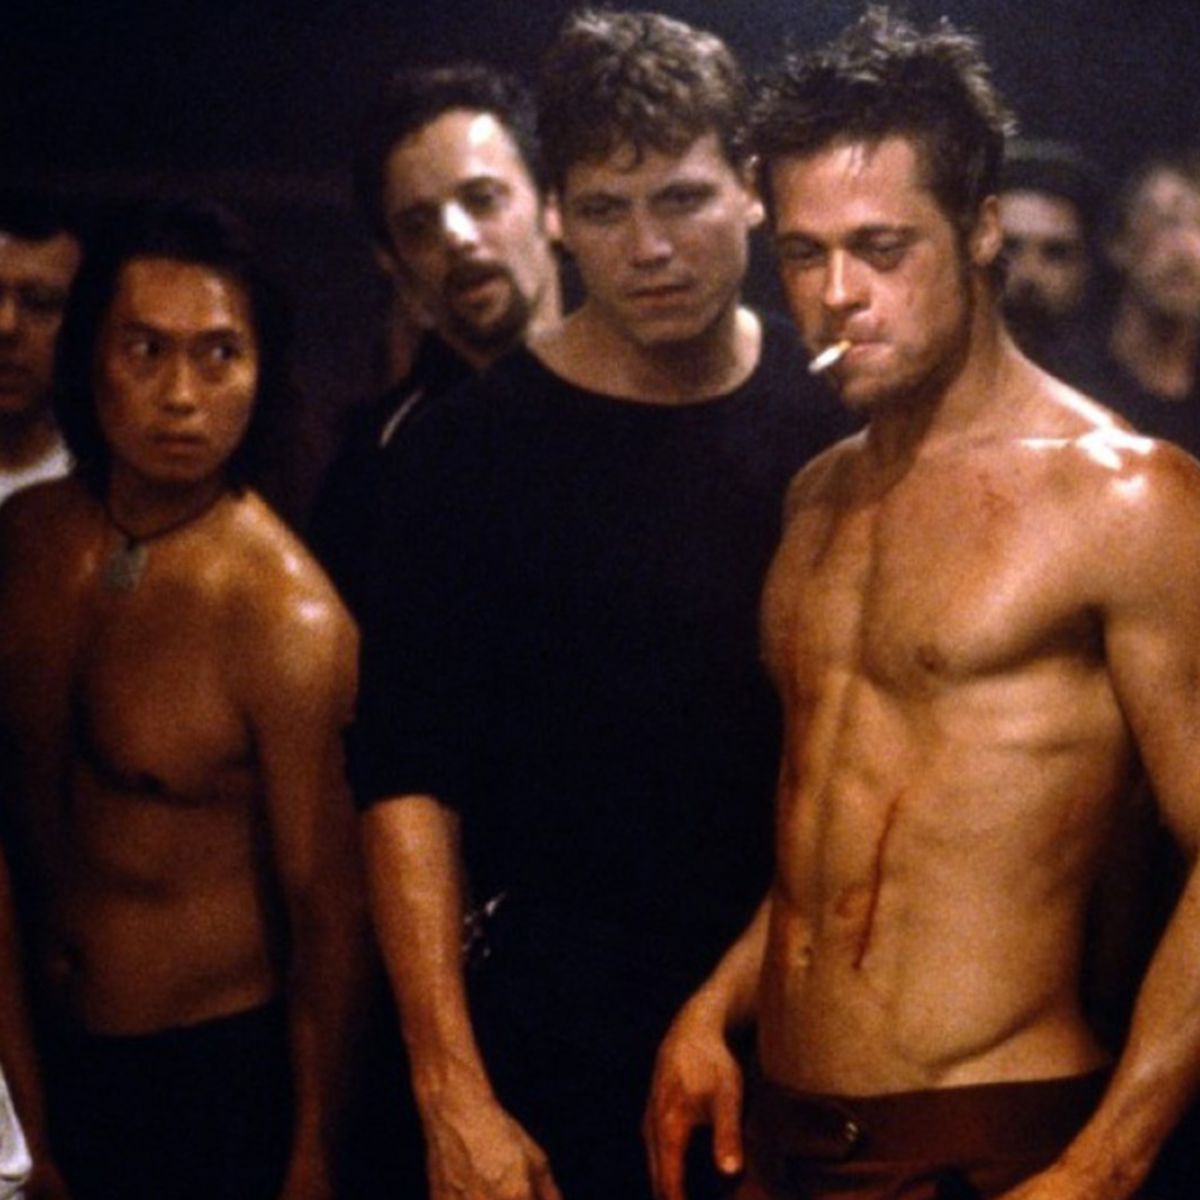 How To Get A Body Like Brad Pitt in Fight Club